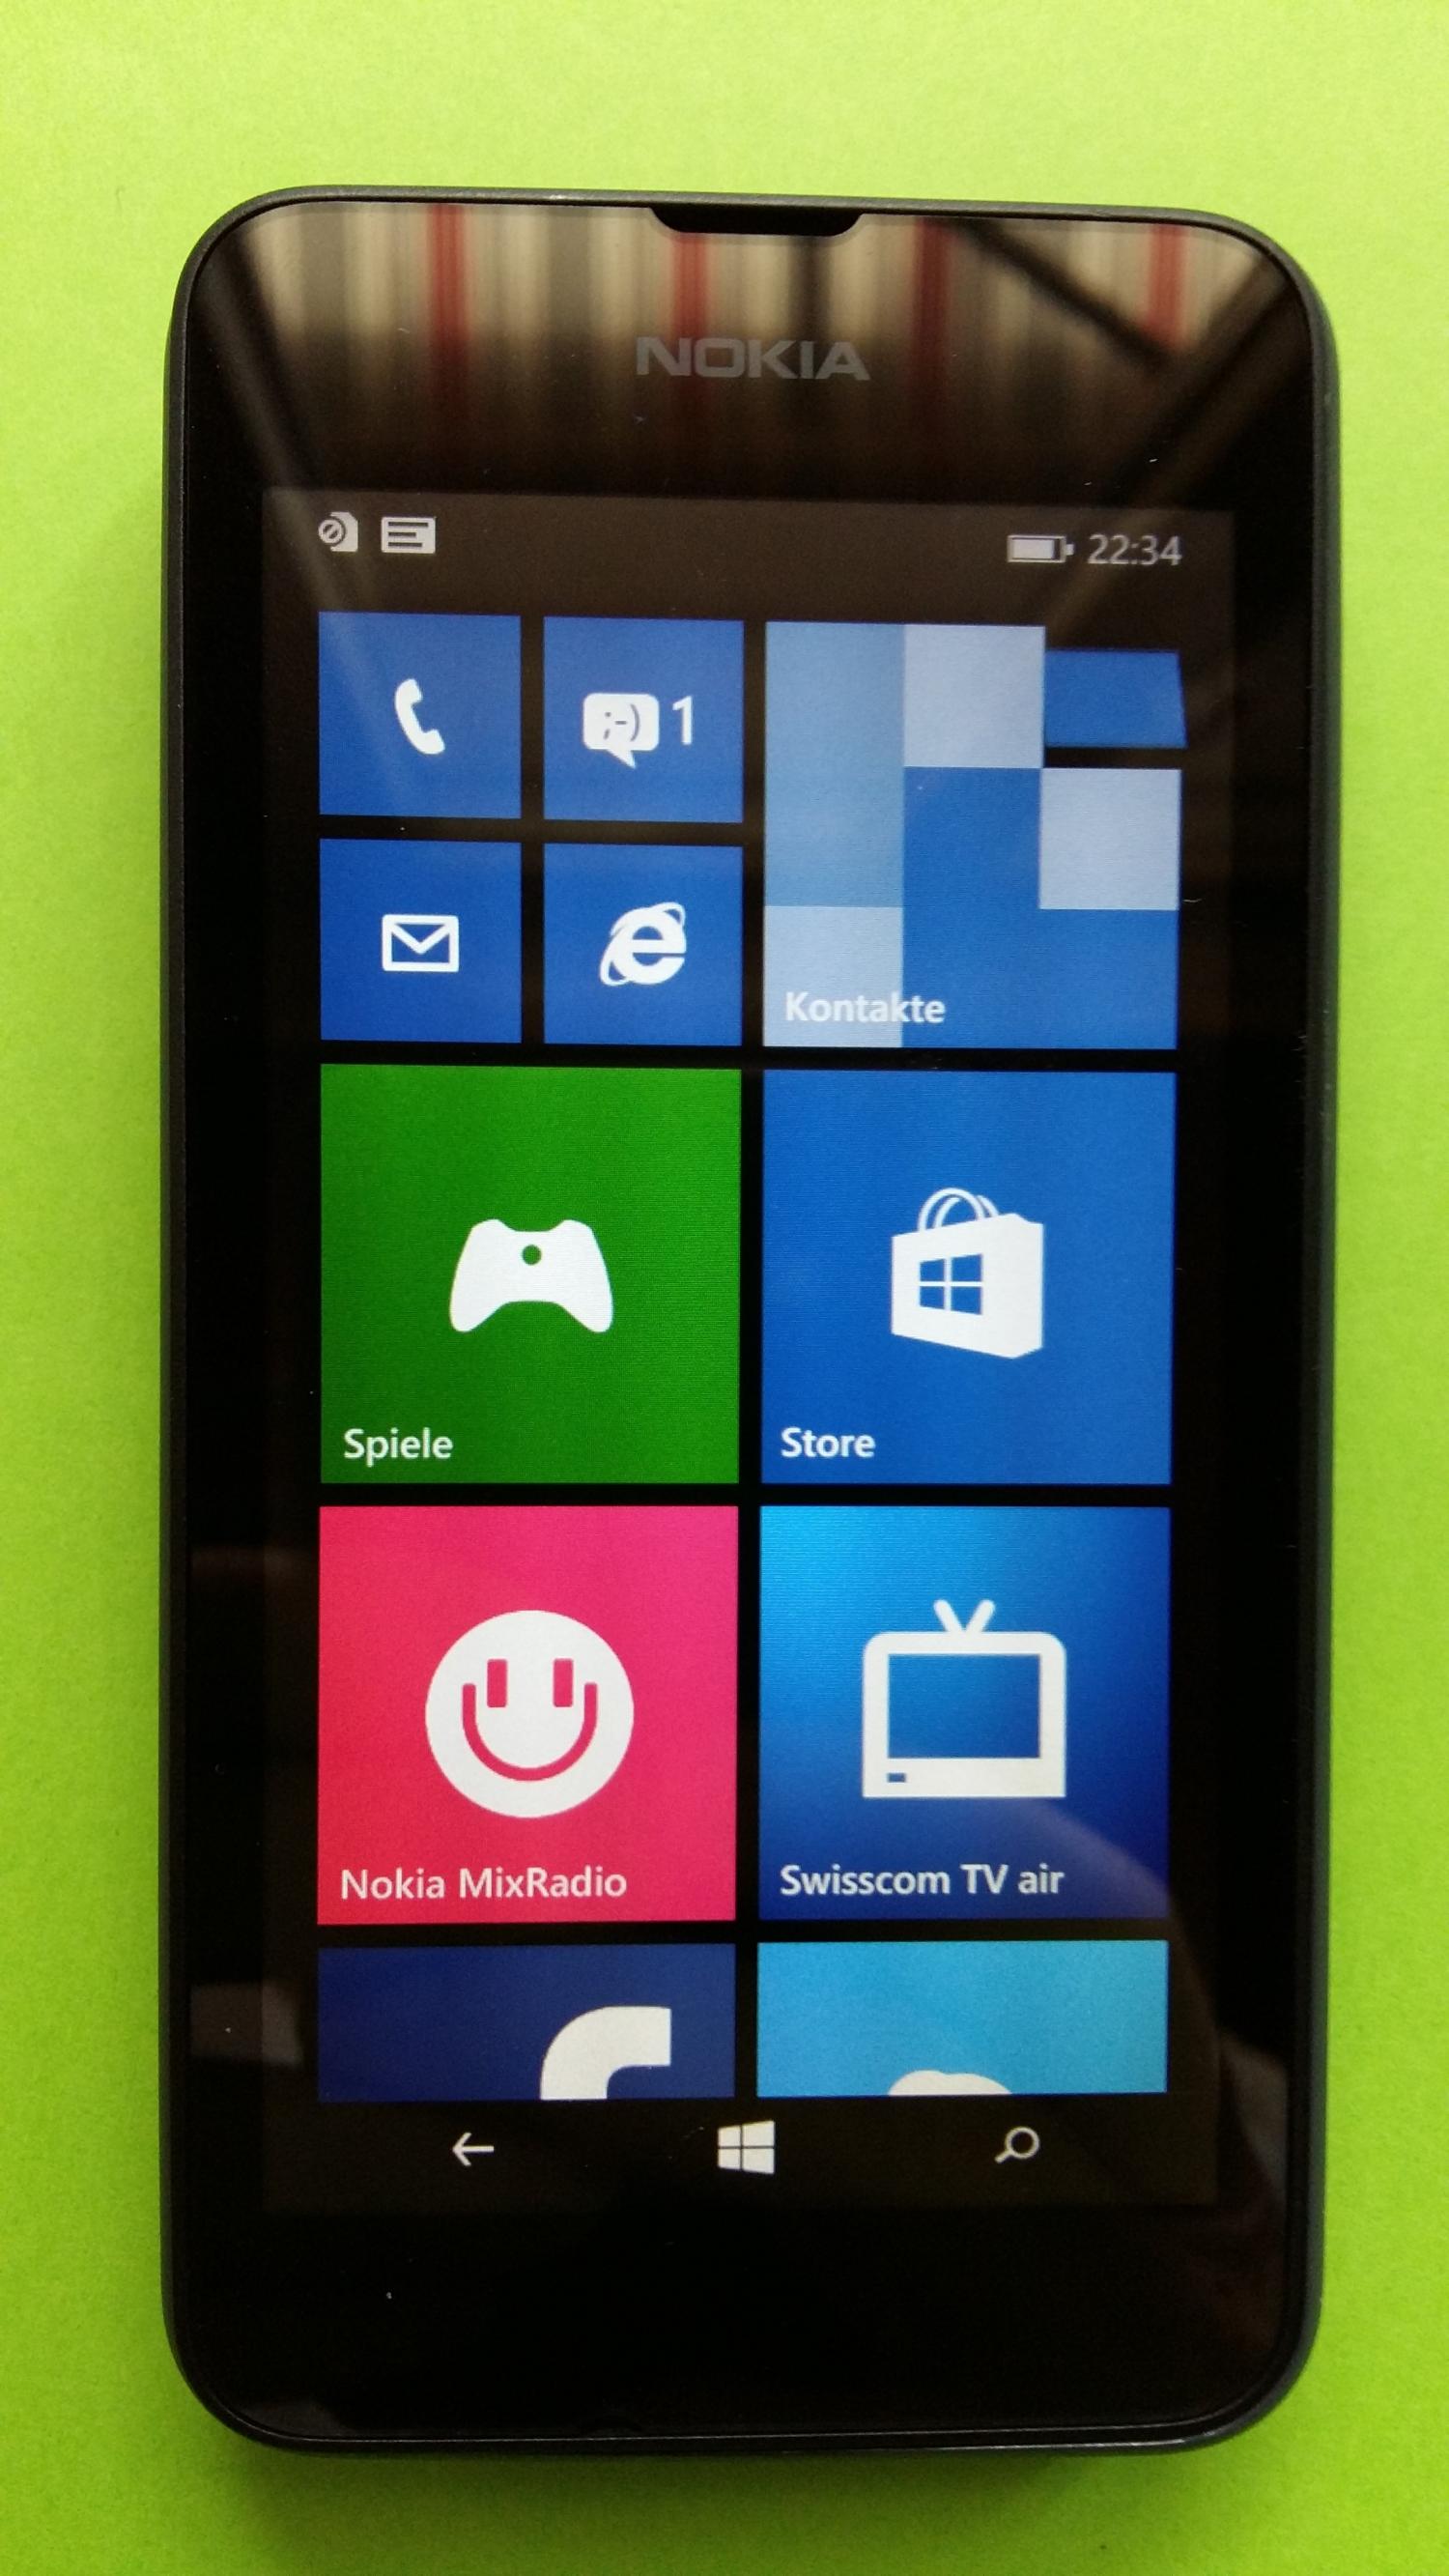 image-7323591-Nokia 530 Lumia (1)1.jpg